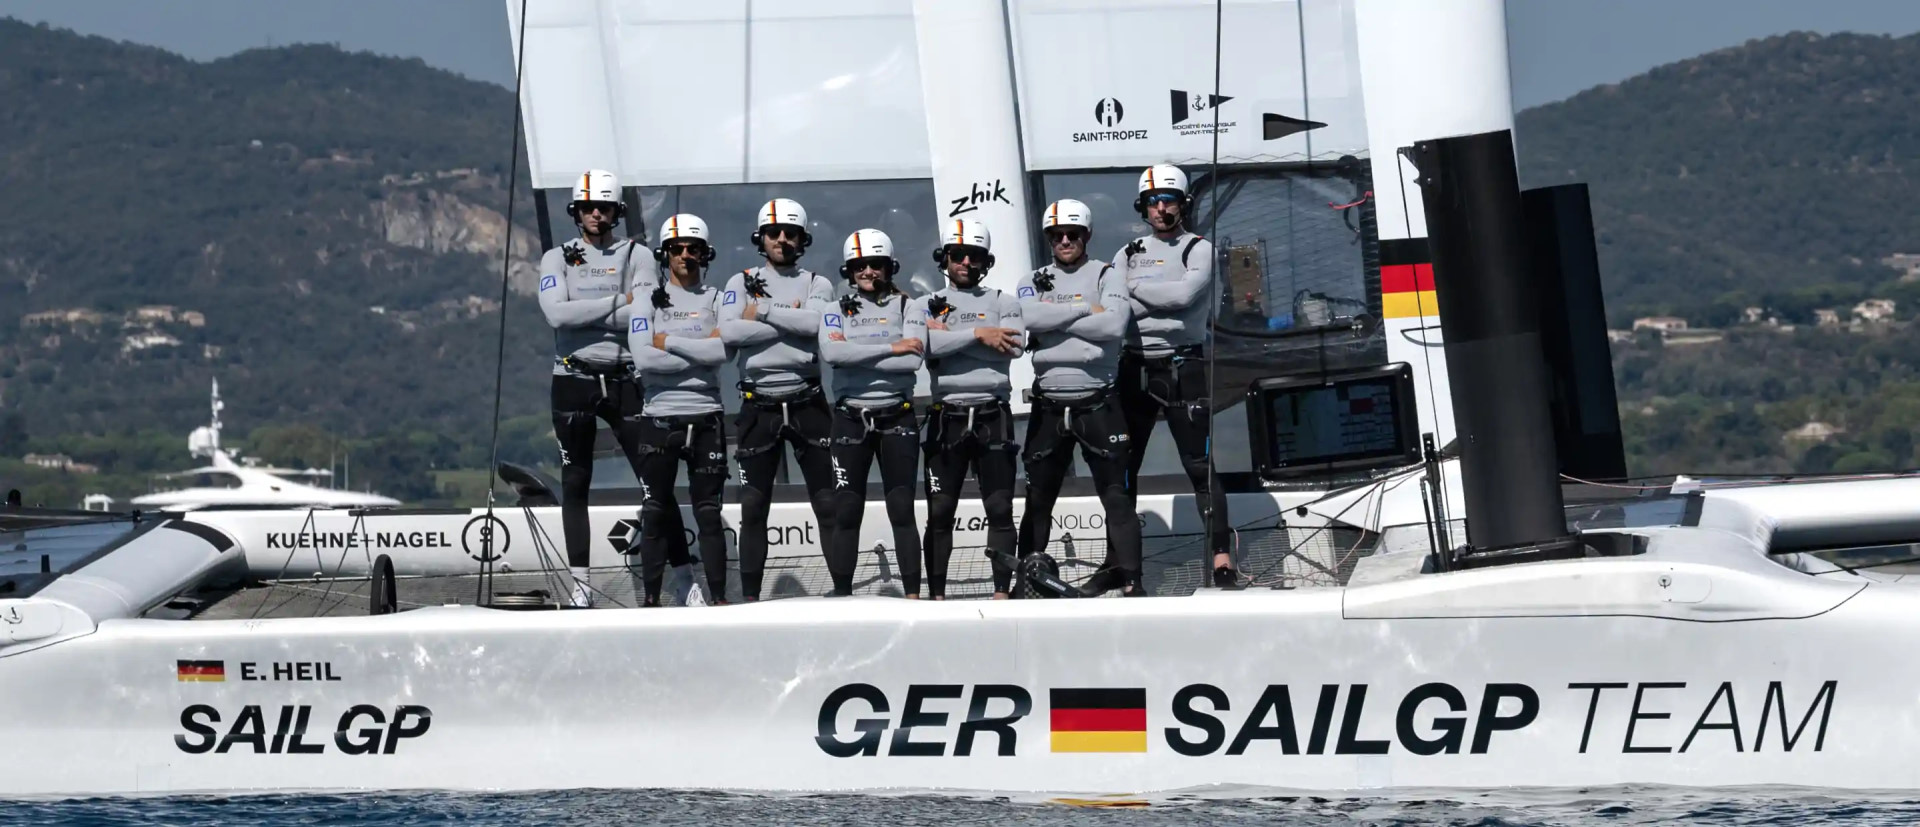 L'équipe allemande de SailGP